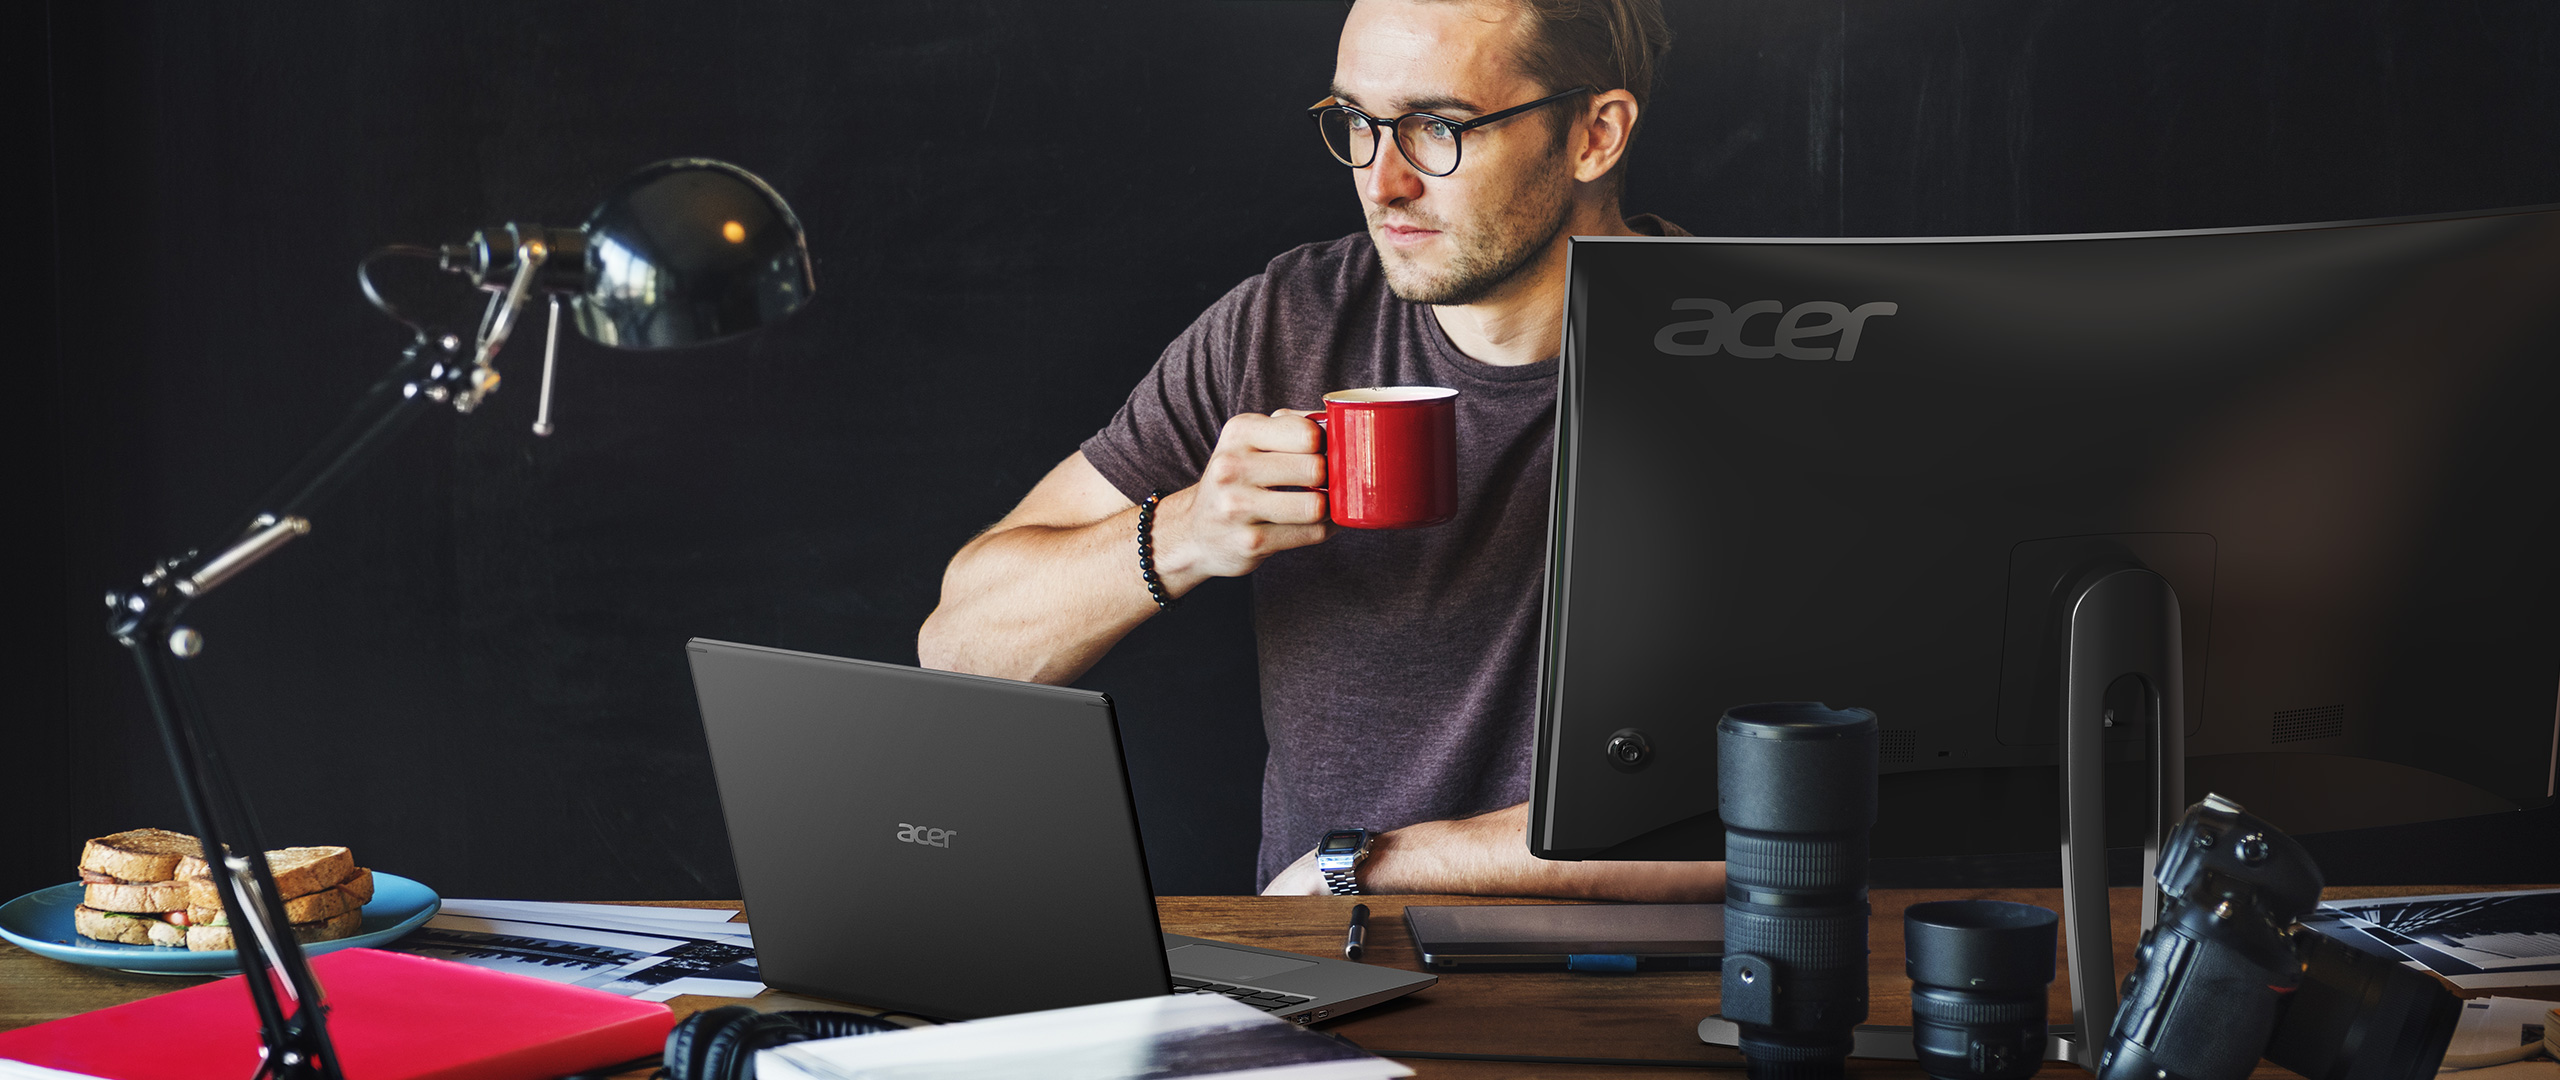 Мужчина с чашкой и ноутбуком Acer Aspire 5